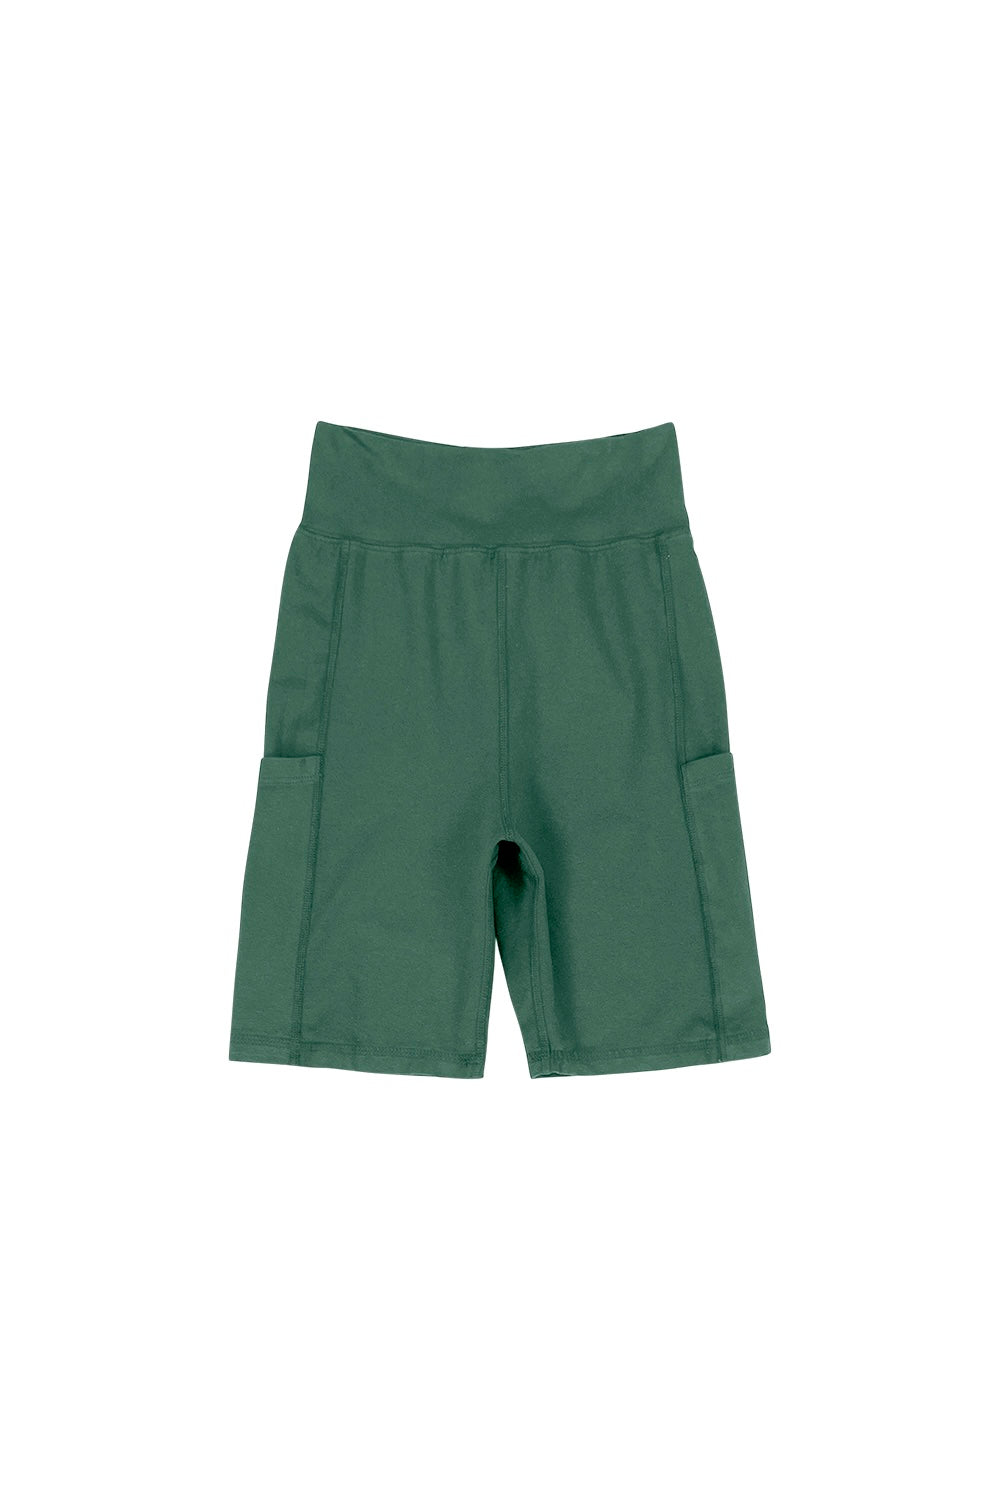 Bike Short with Pockets | Jungmaven Hemp Clothing & Accessories / Color: Hunter Green